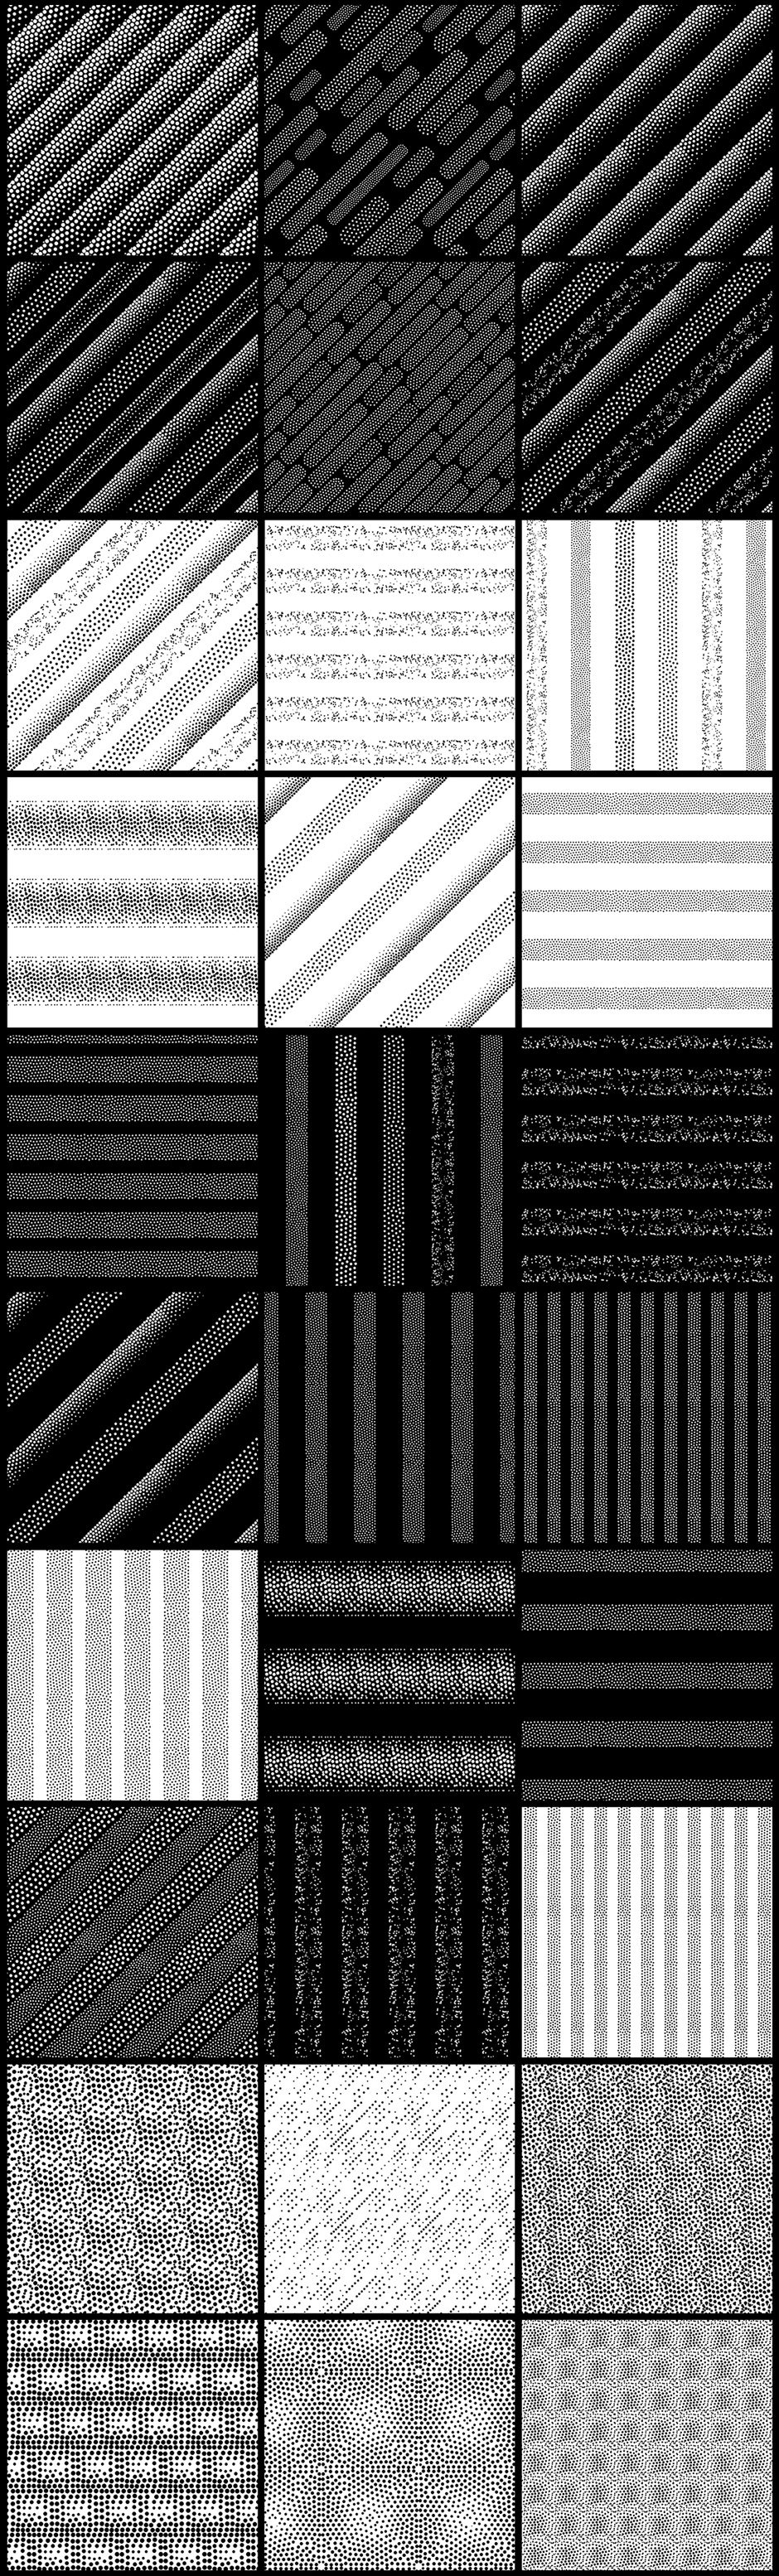 144 Seamless Pointillism Patterns Pack